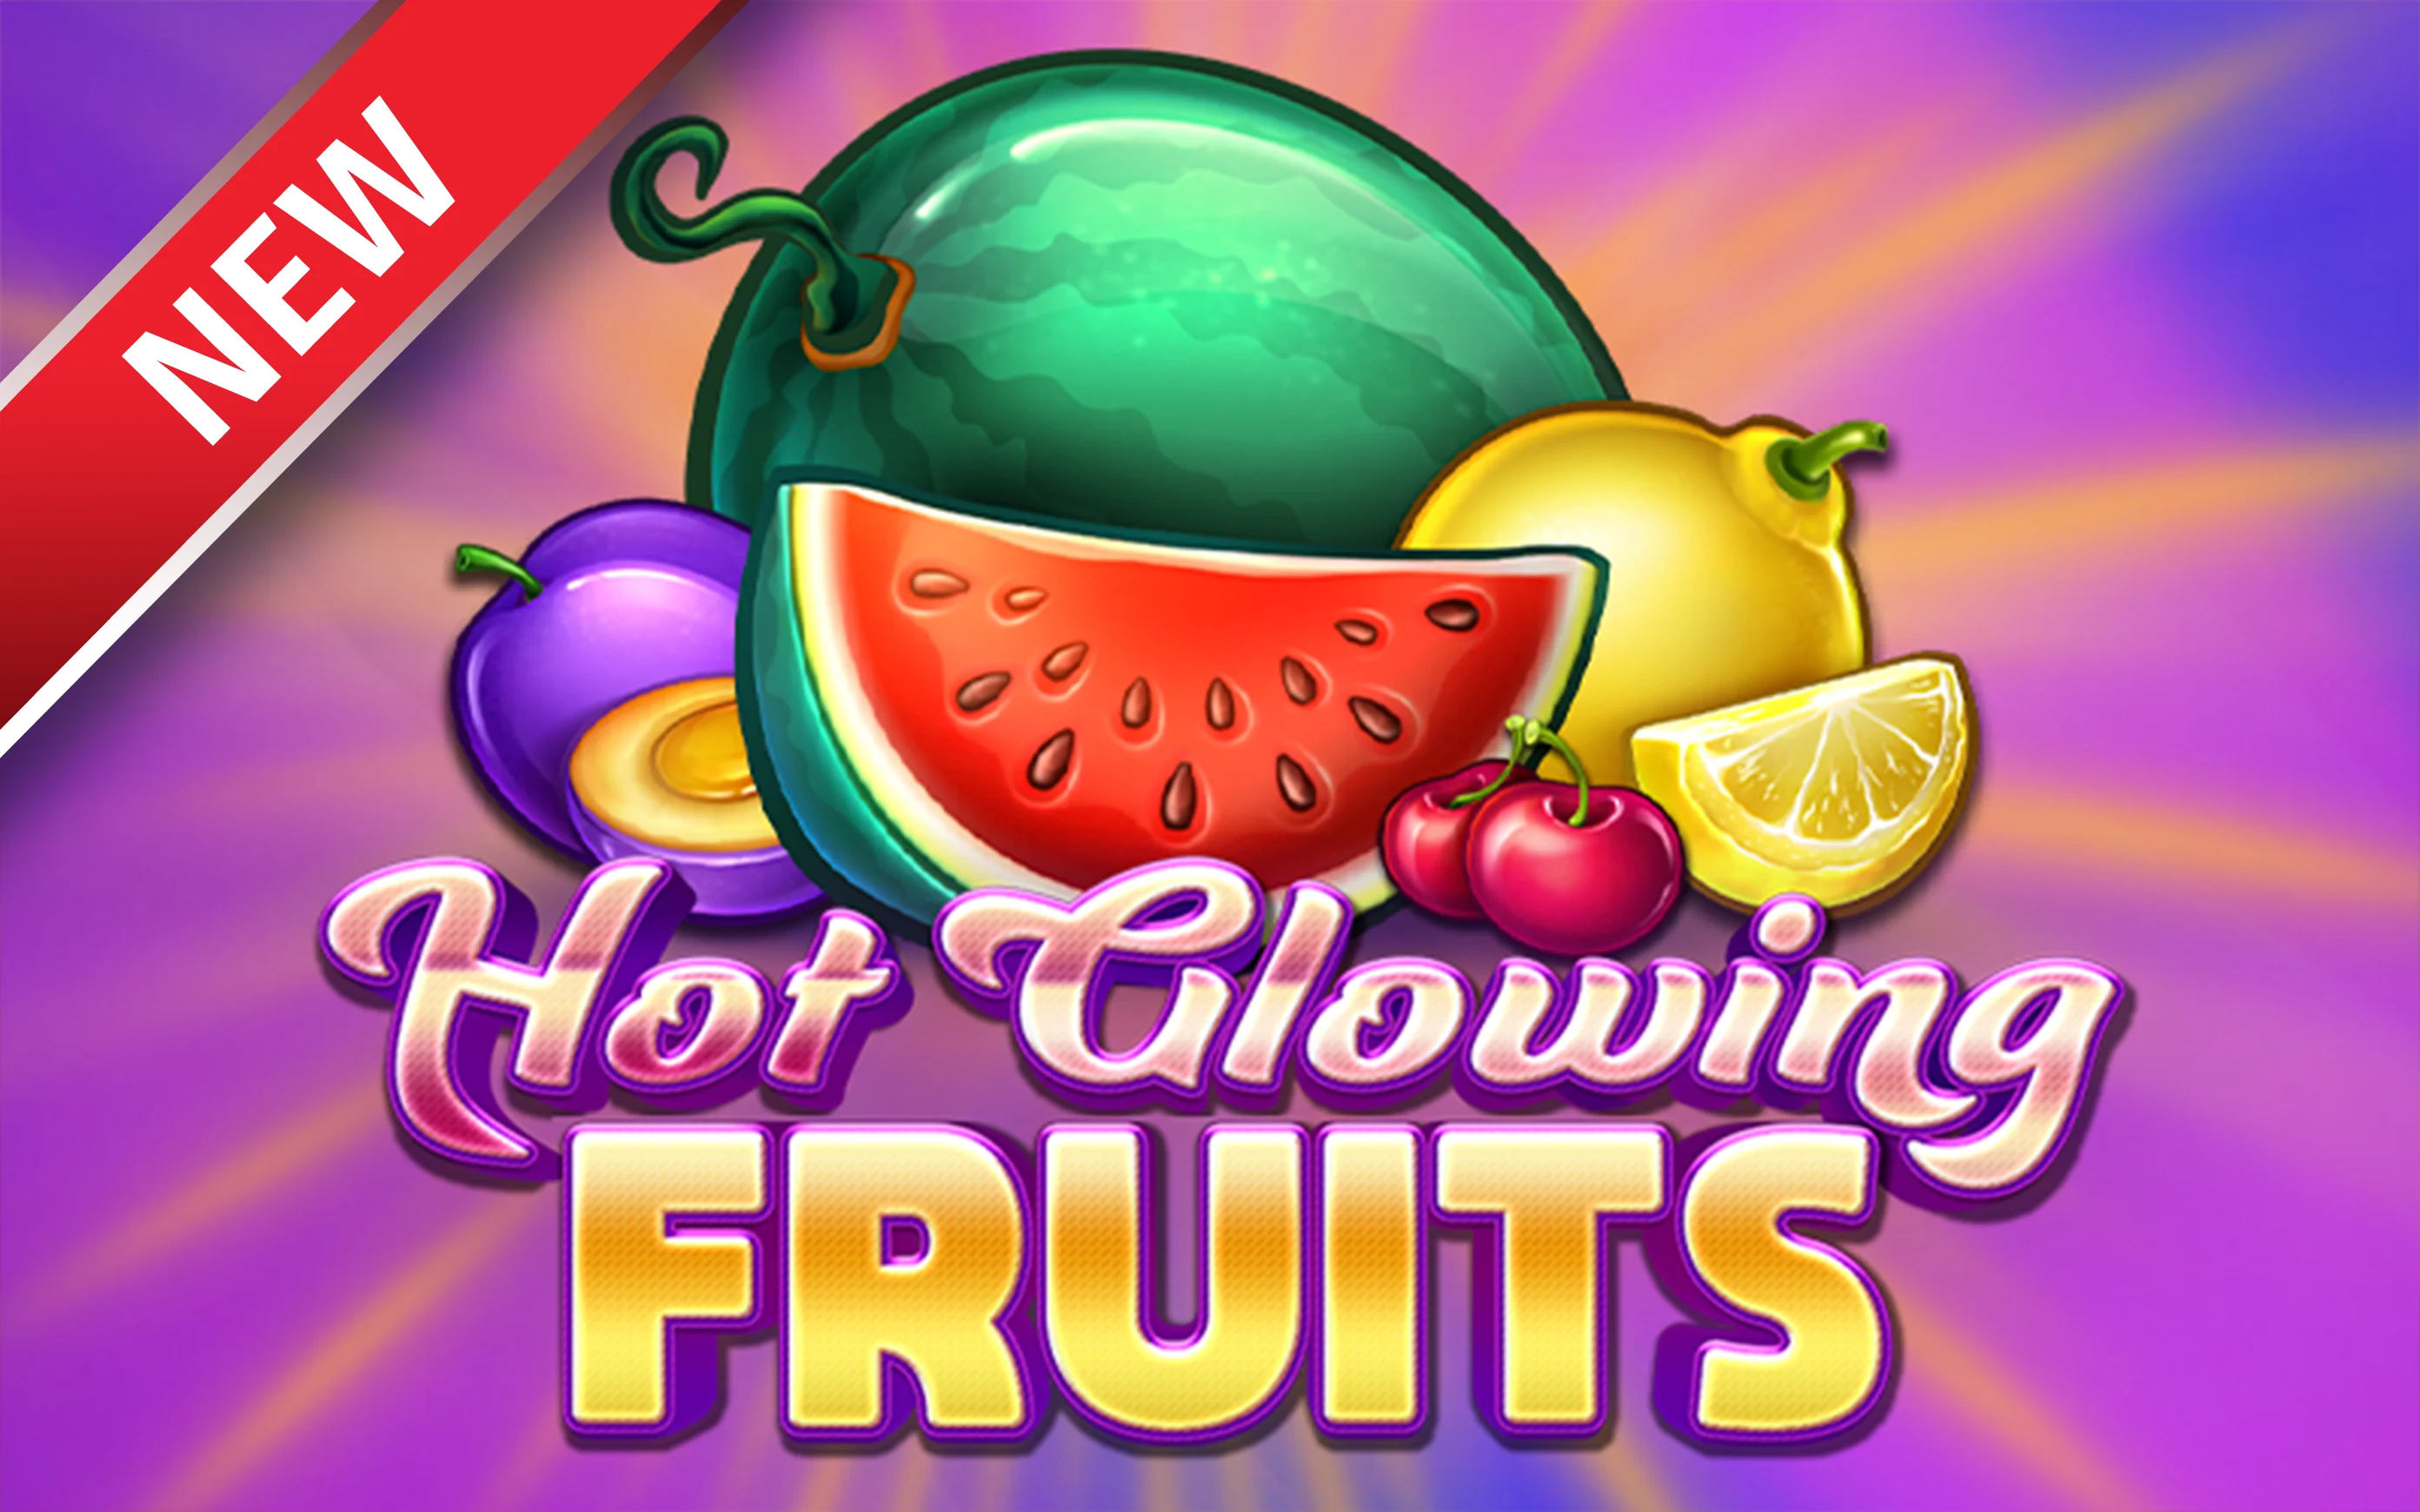 Play Hot Glowing Fruits on Starcasino.be online casino